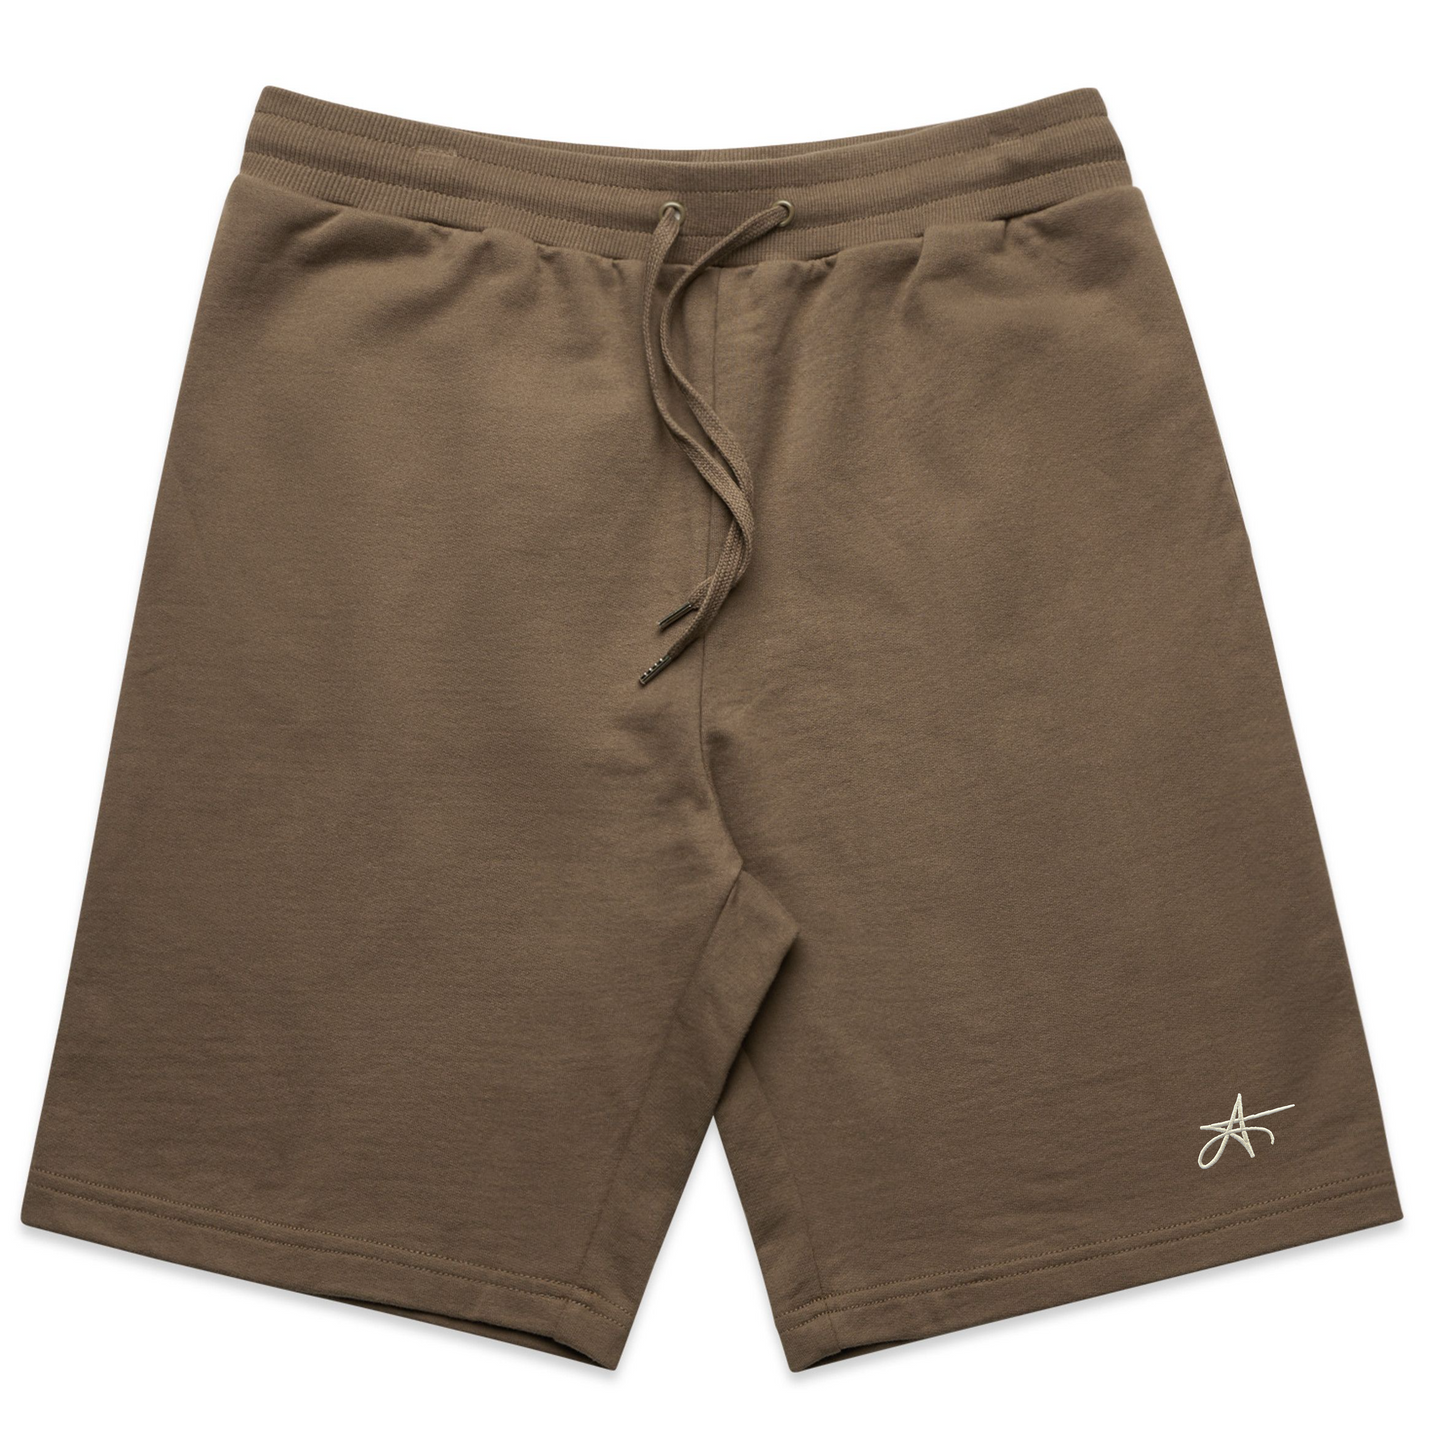 DeAngelo - Mud Shorts 20" Outseam Length